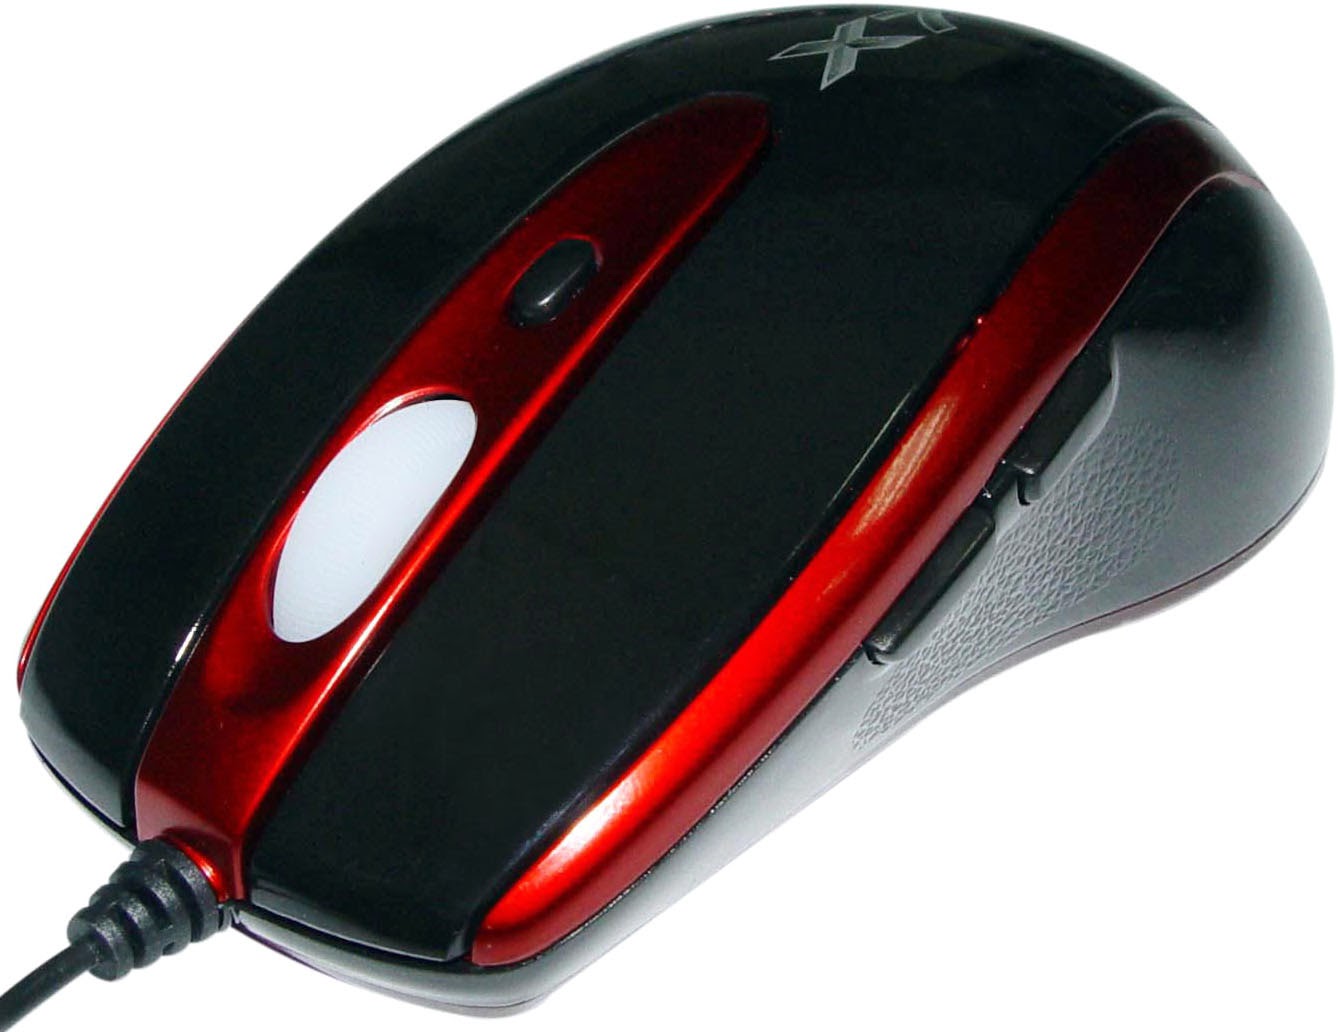 Sibm mouse. Мышь a4tech e14u1108. A4tech Mouse 69-320. Мышь hq CMP-mouse52. Маус.